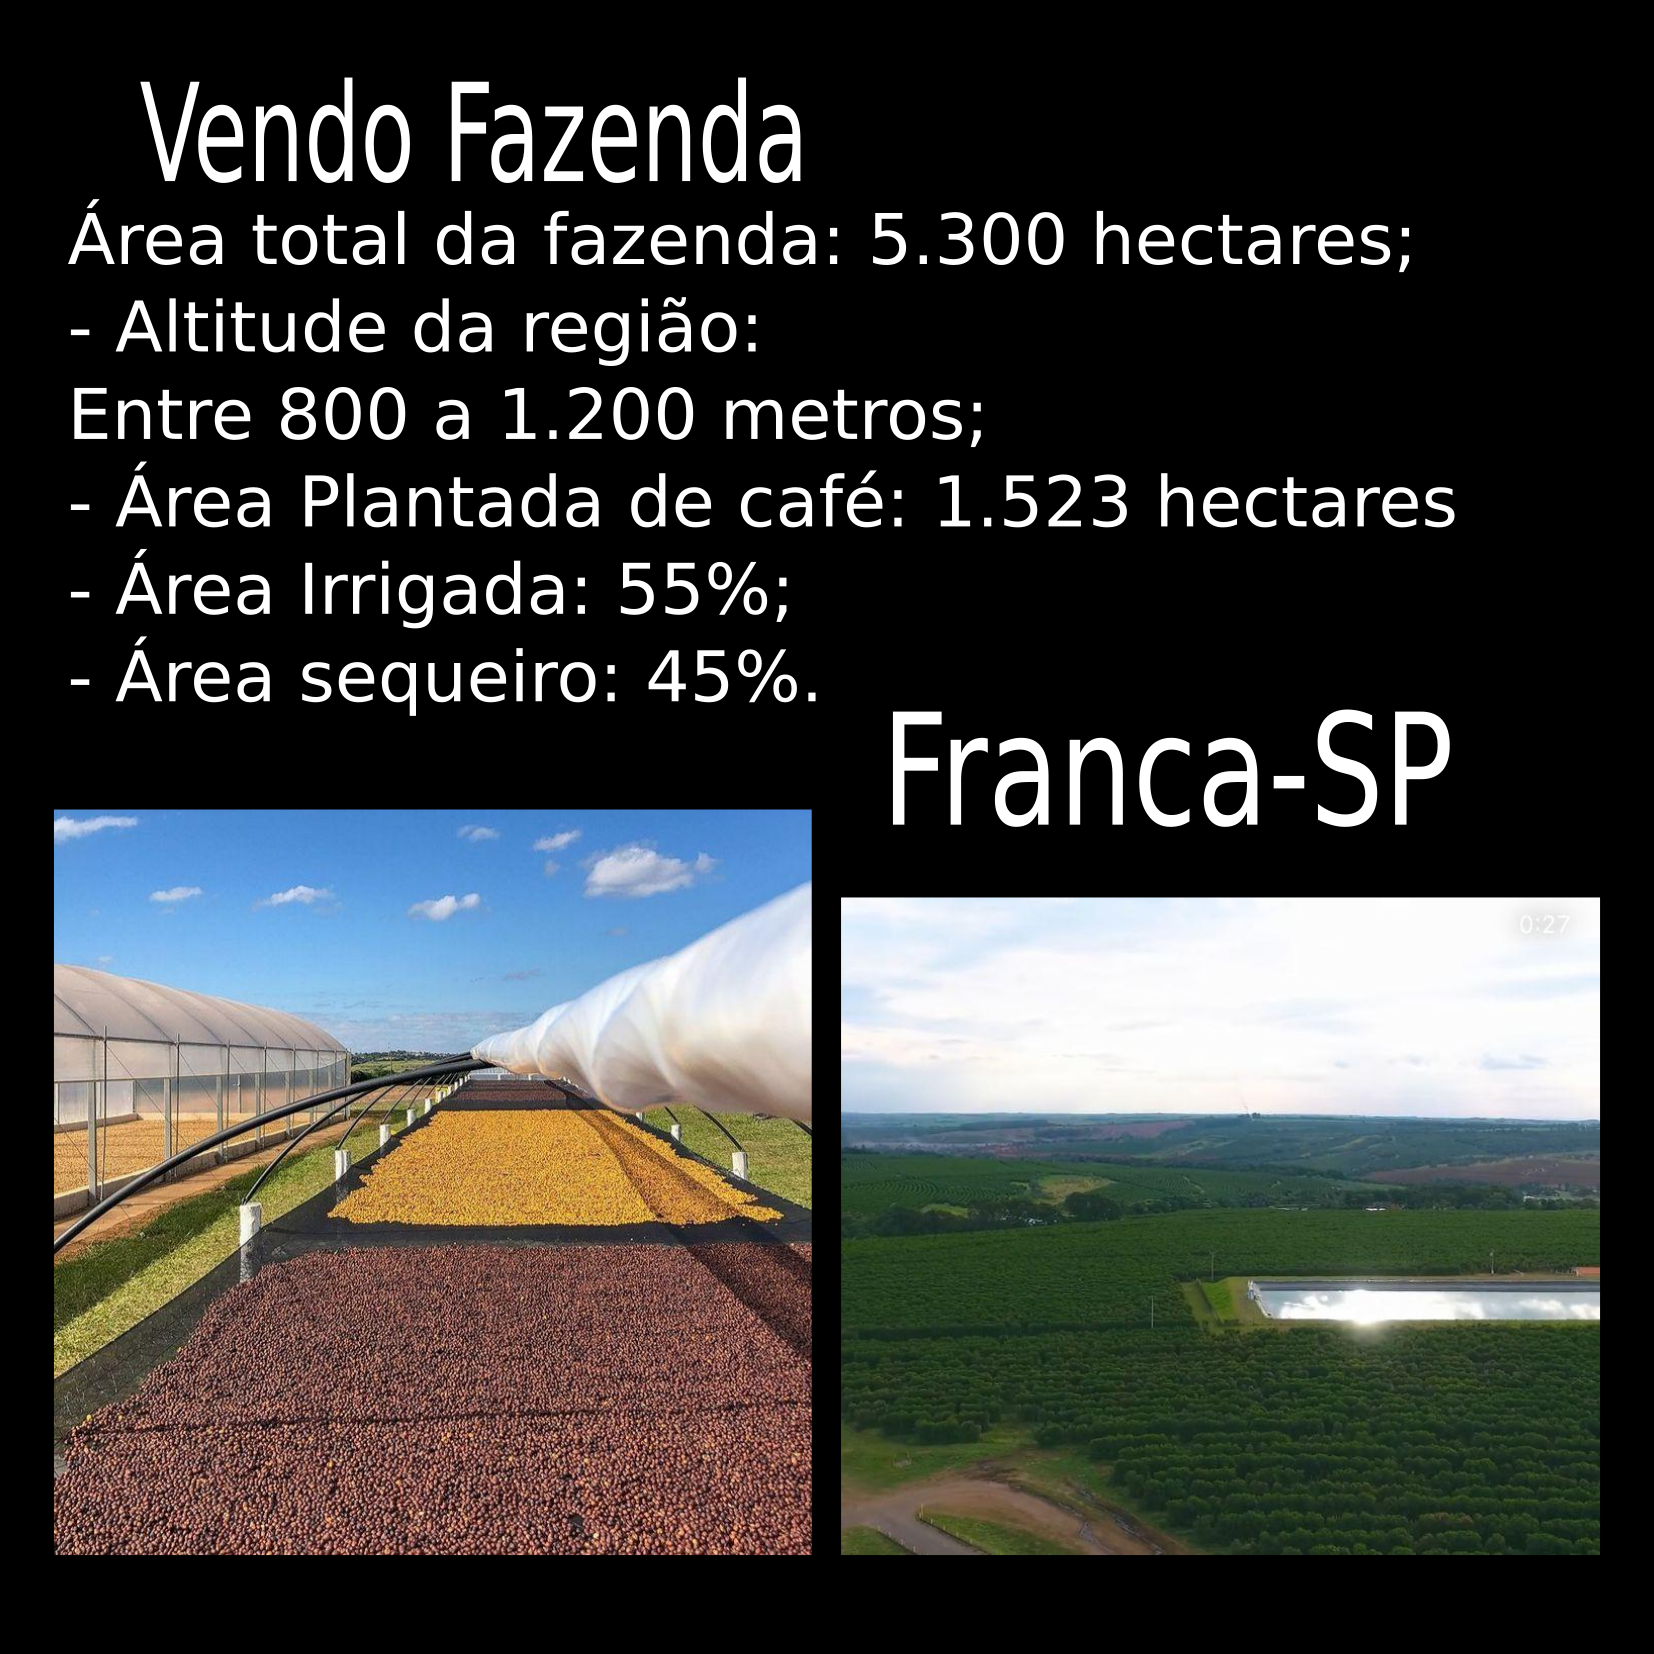 VENDO FAZENDA DE CAFÉ 5300 HECTARES- FRANCA-SP capa